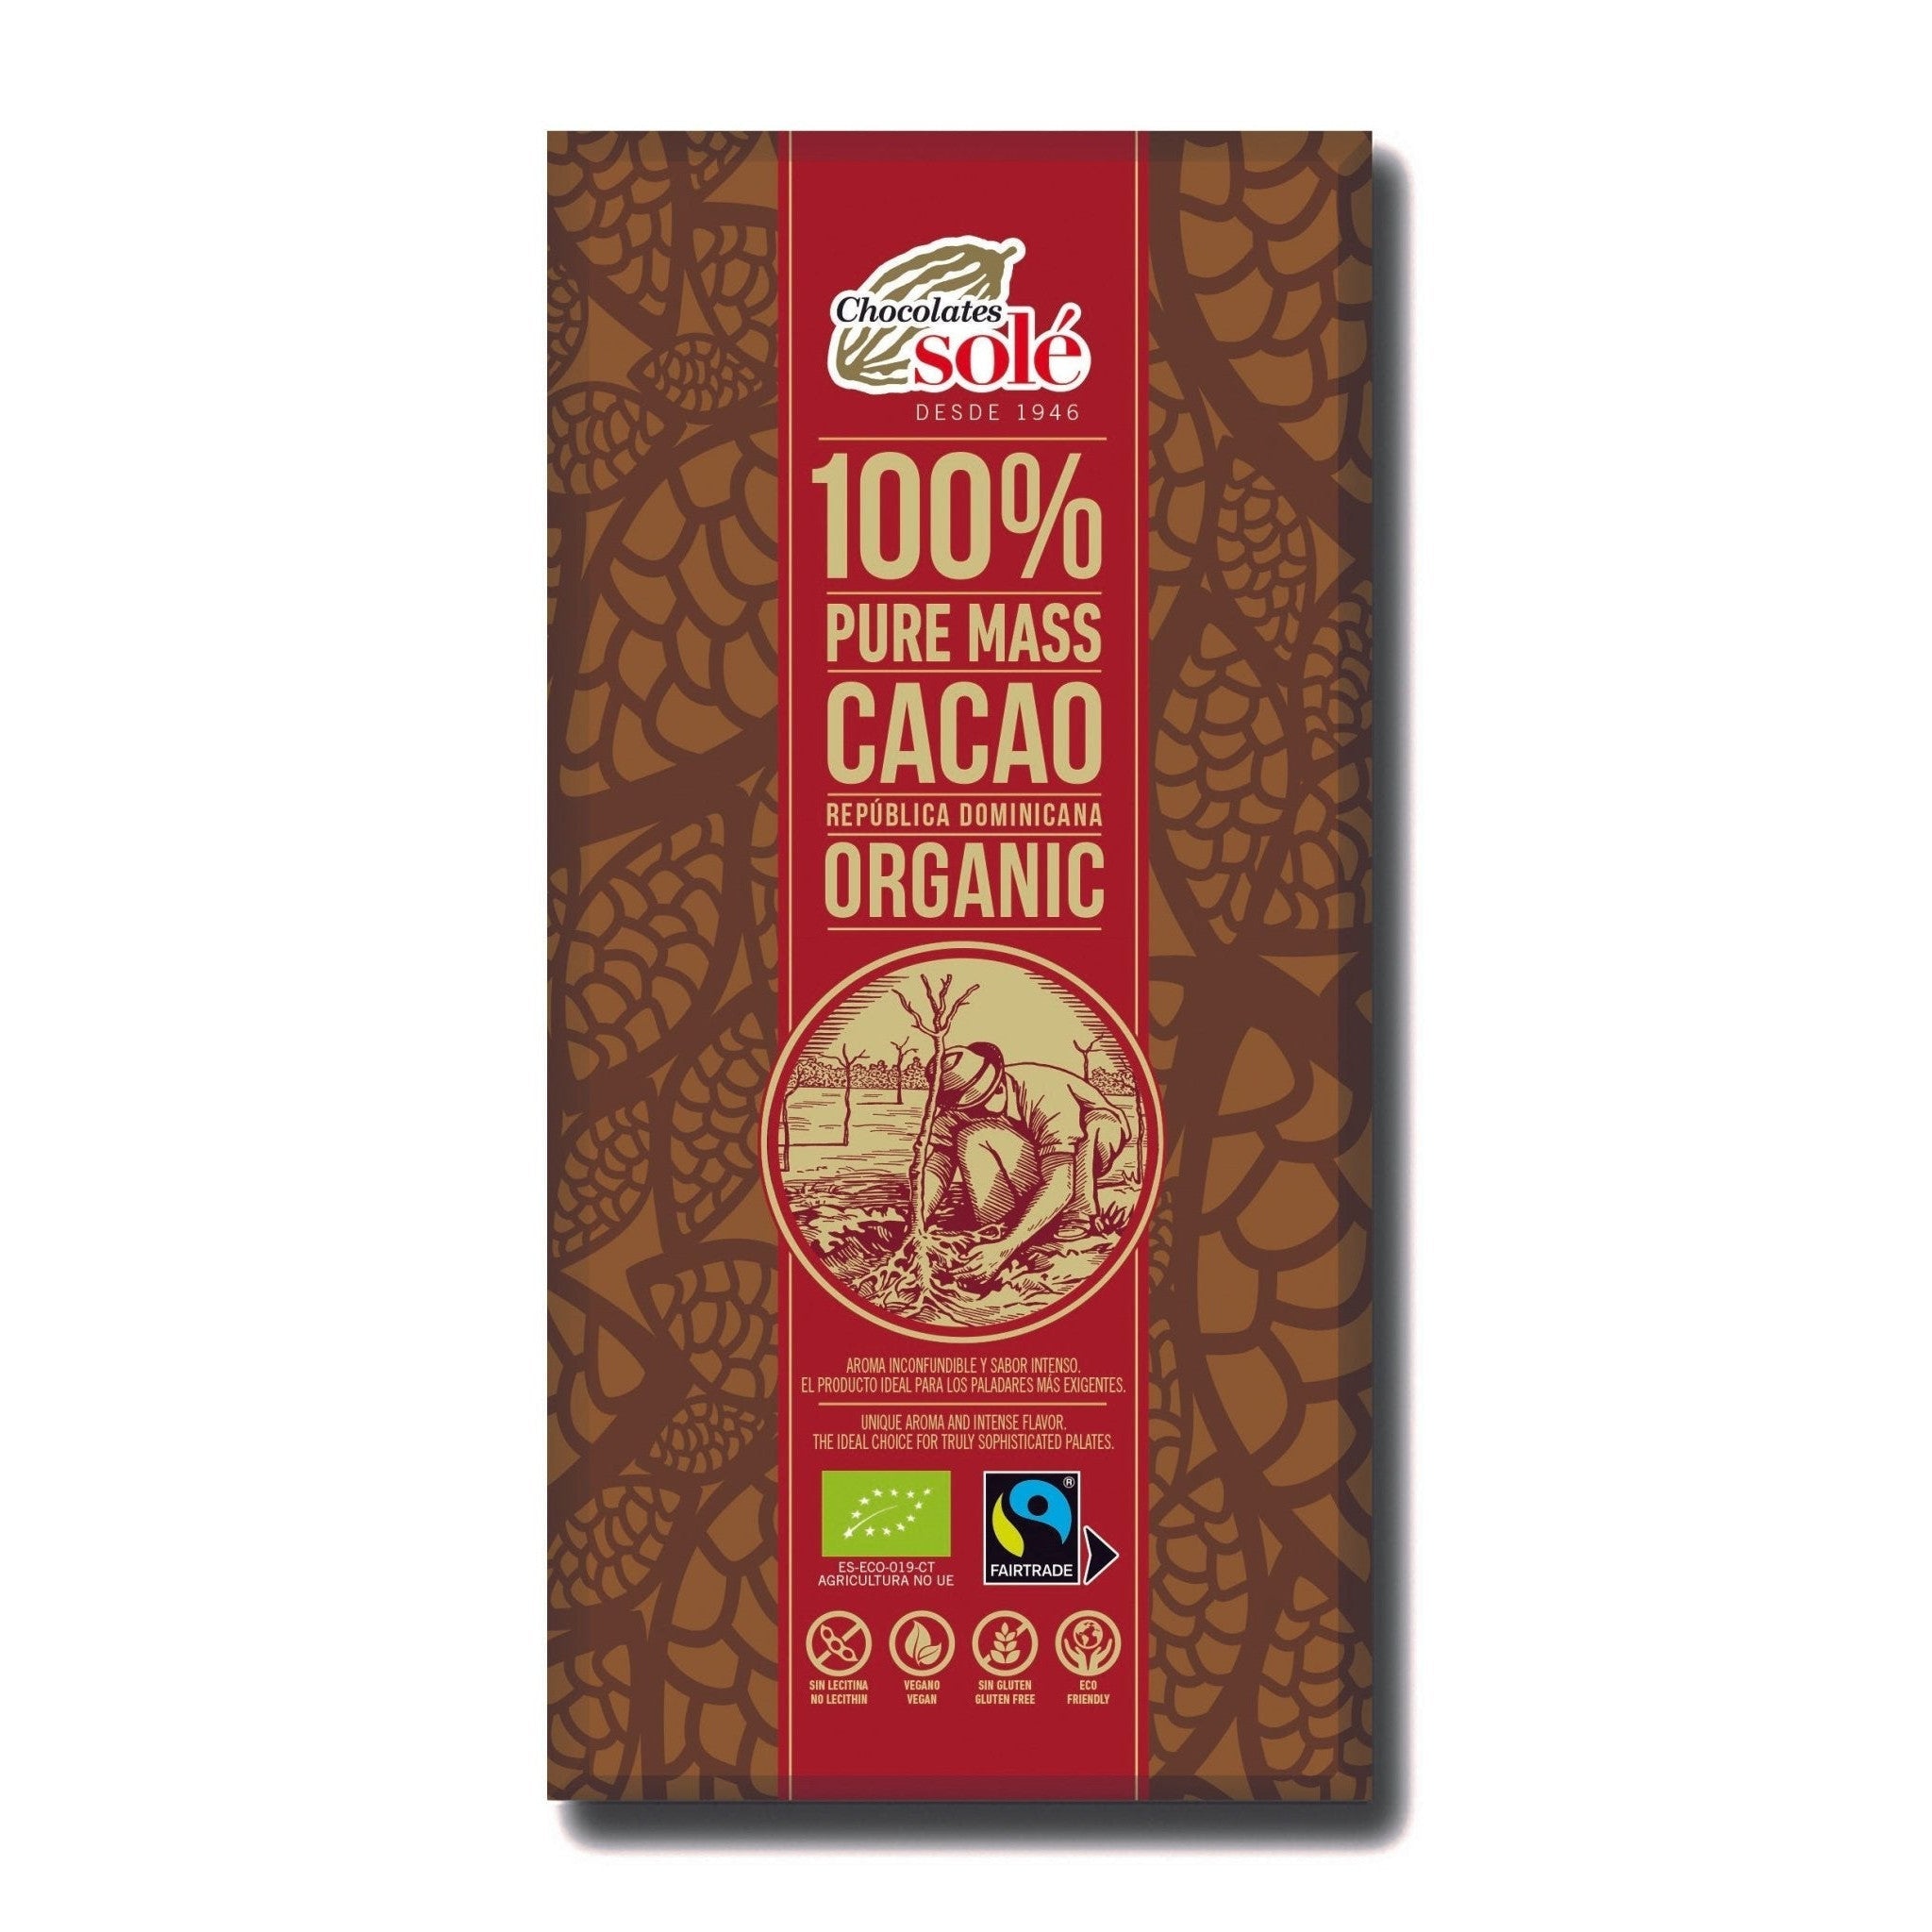 Organic Schokolade 100% (100g) - Gourmet Markt - Chocolates Sole